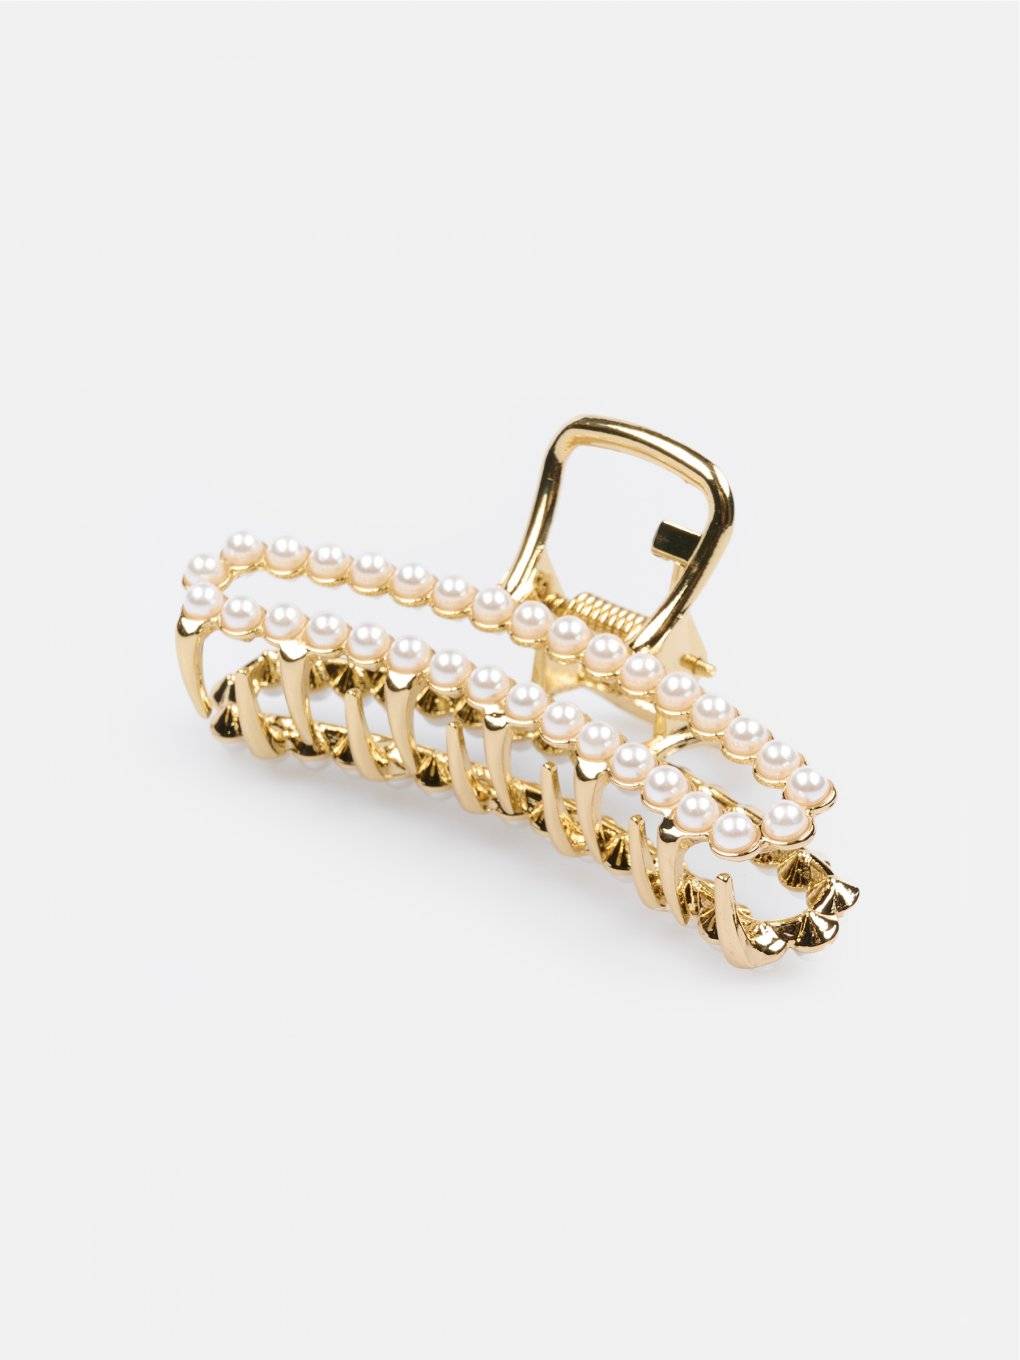 Metal hairgrip with pearls